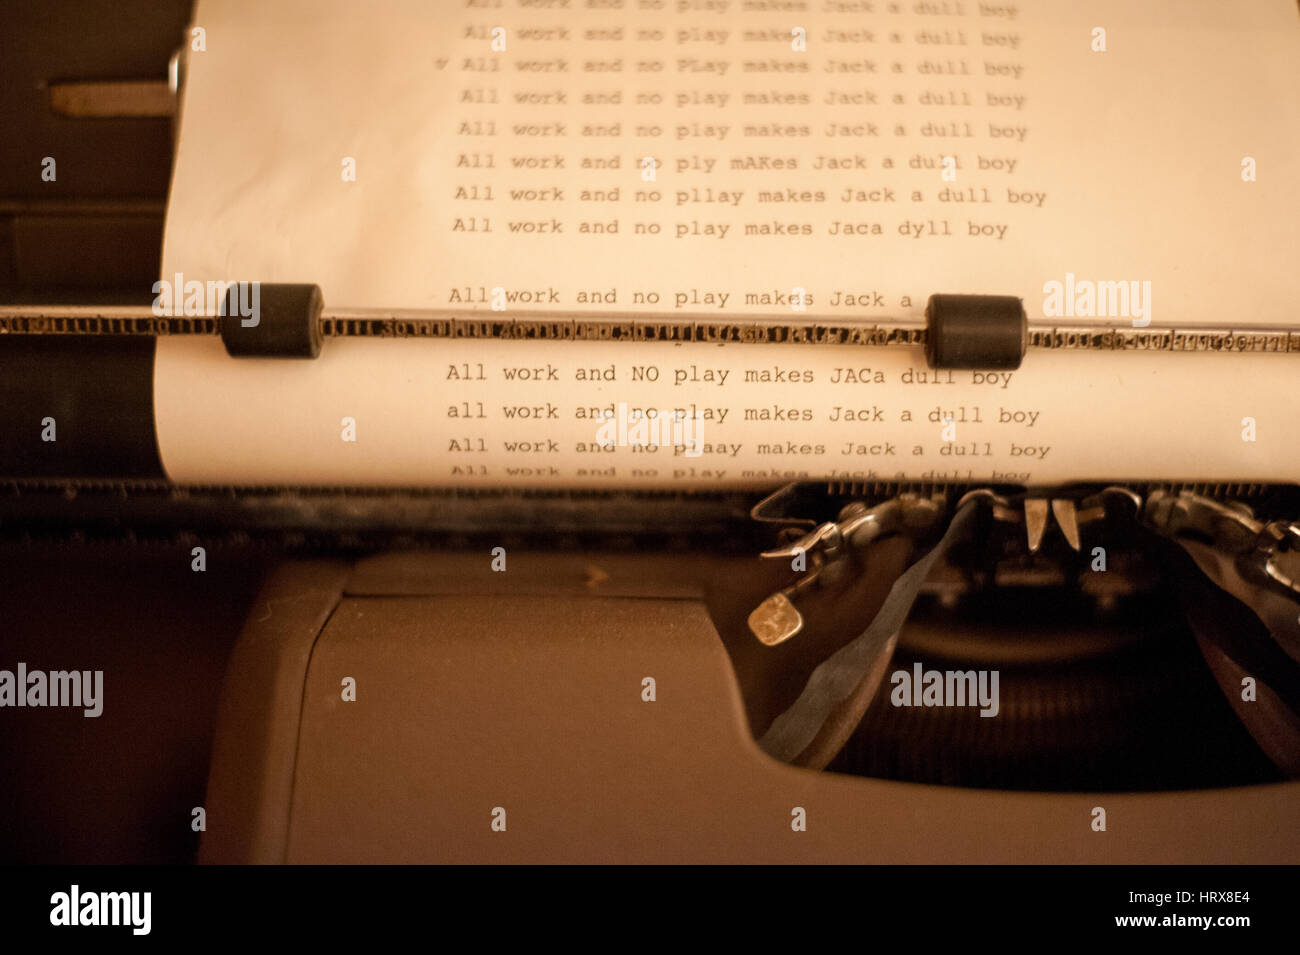 Schreibmaschine, The Shining Stockfotografie - Alamy